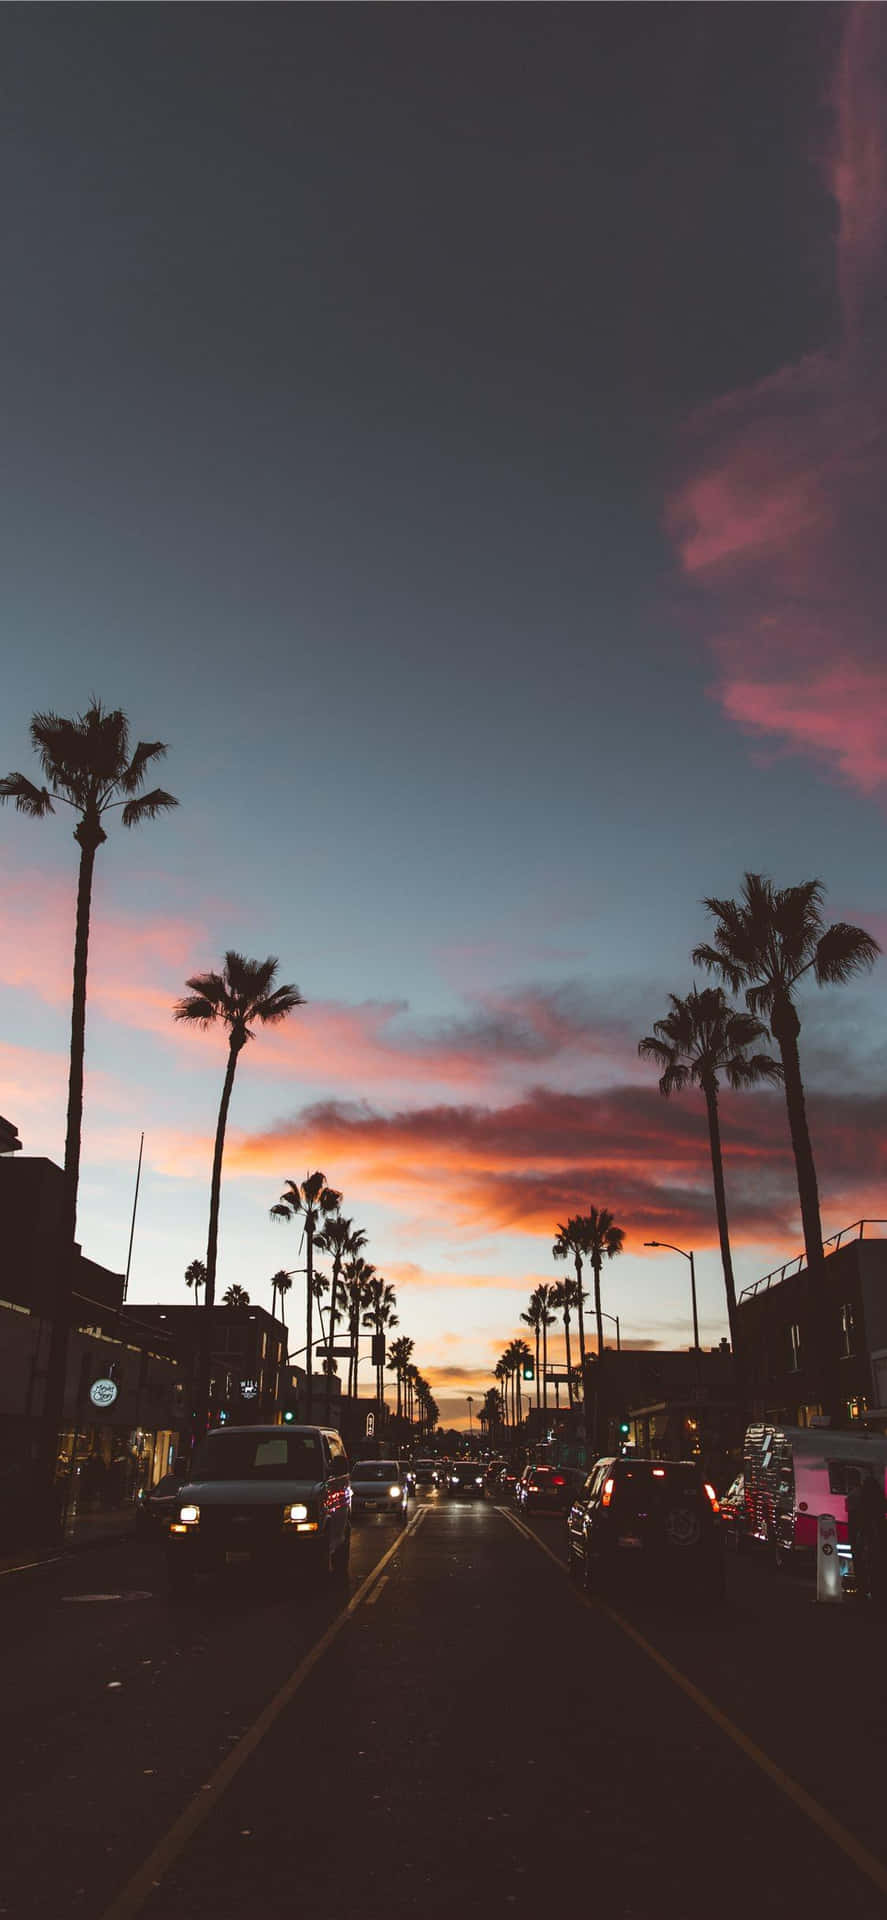 Sunset Boulevard Palm Trees.jpg Wallpaper